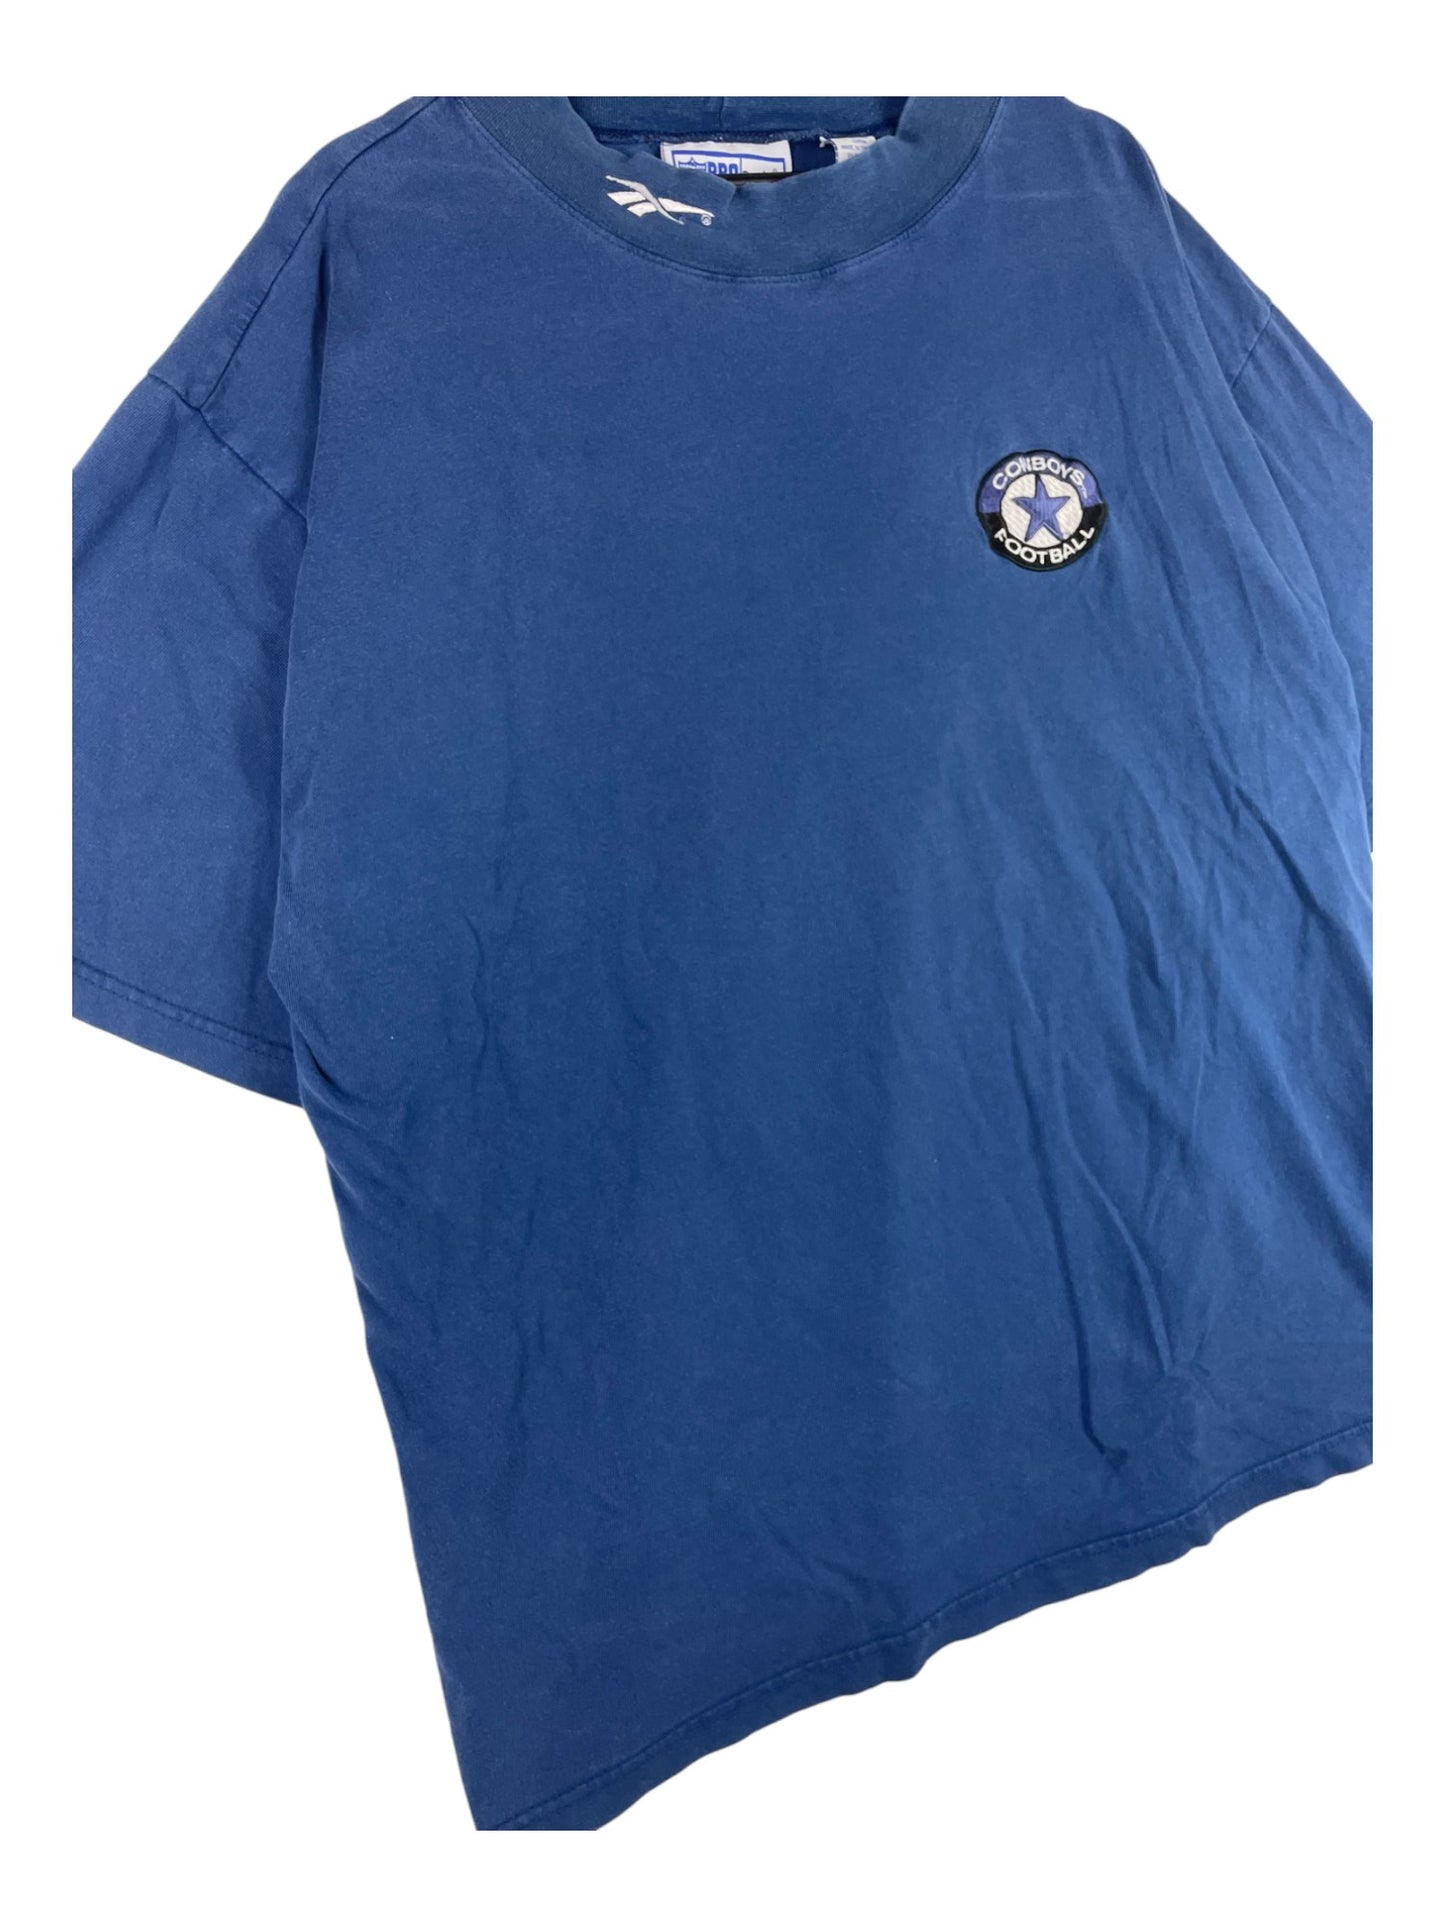 Cowboys Mockneck T-Shirt (Boxy fit)